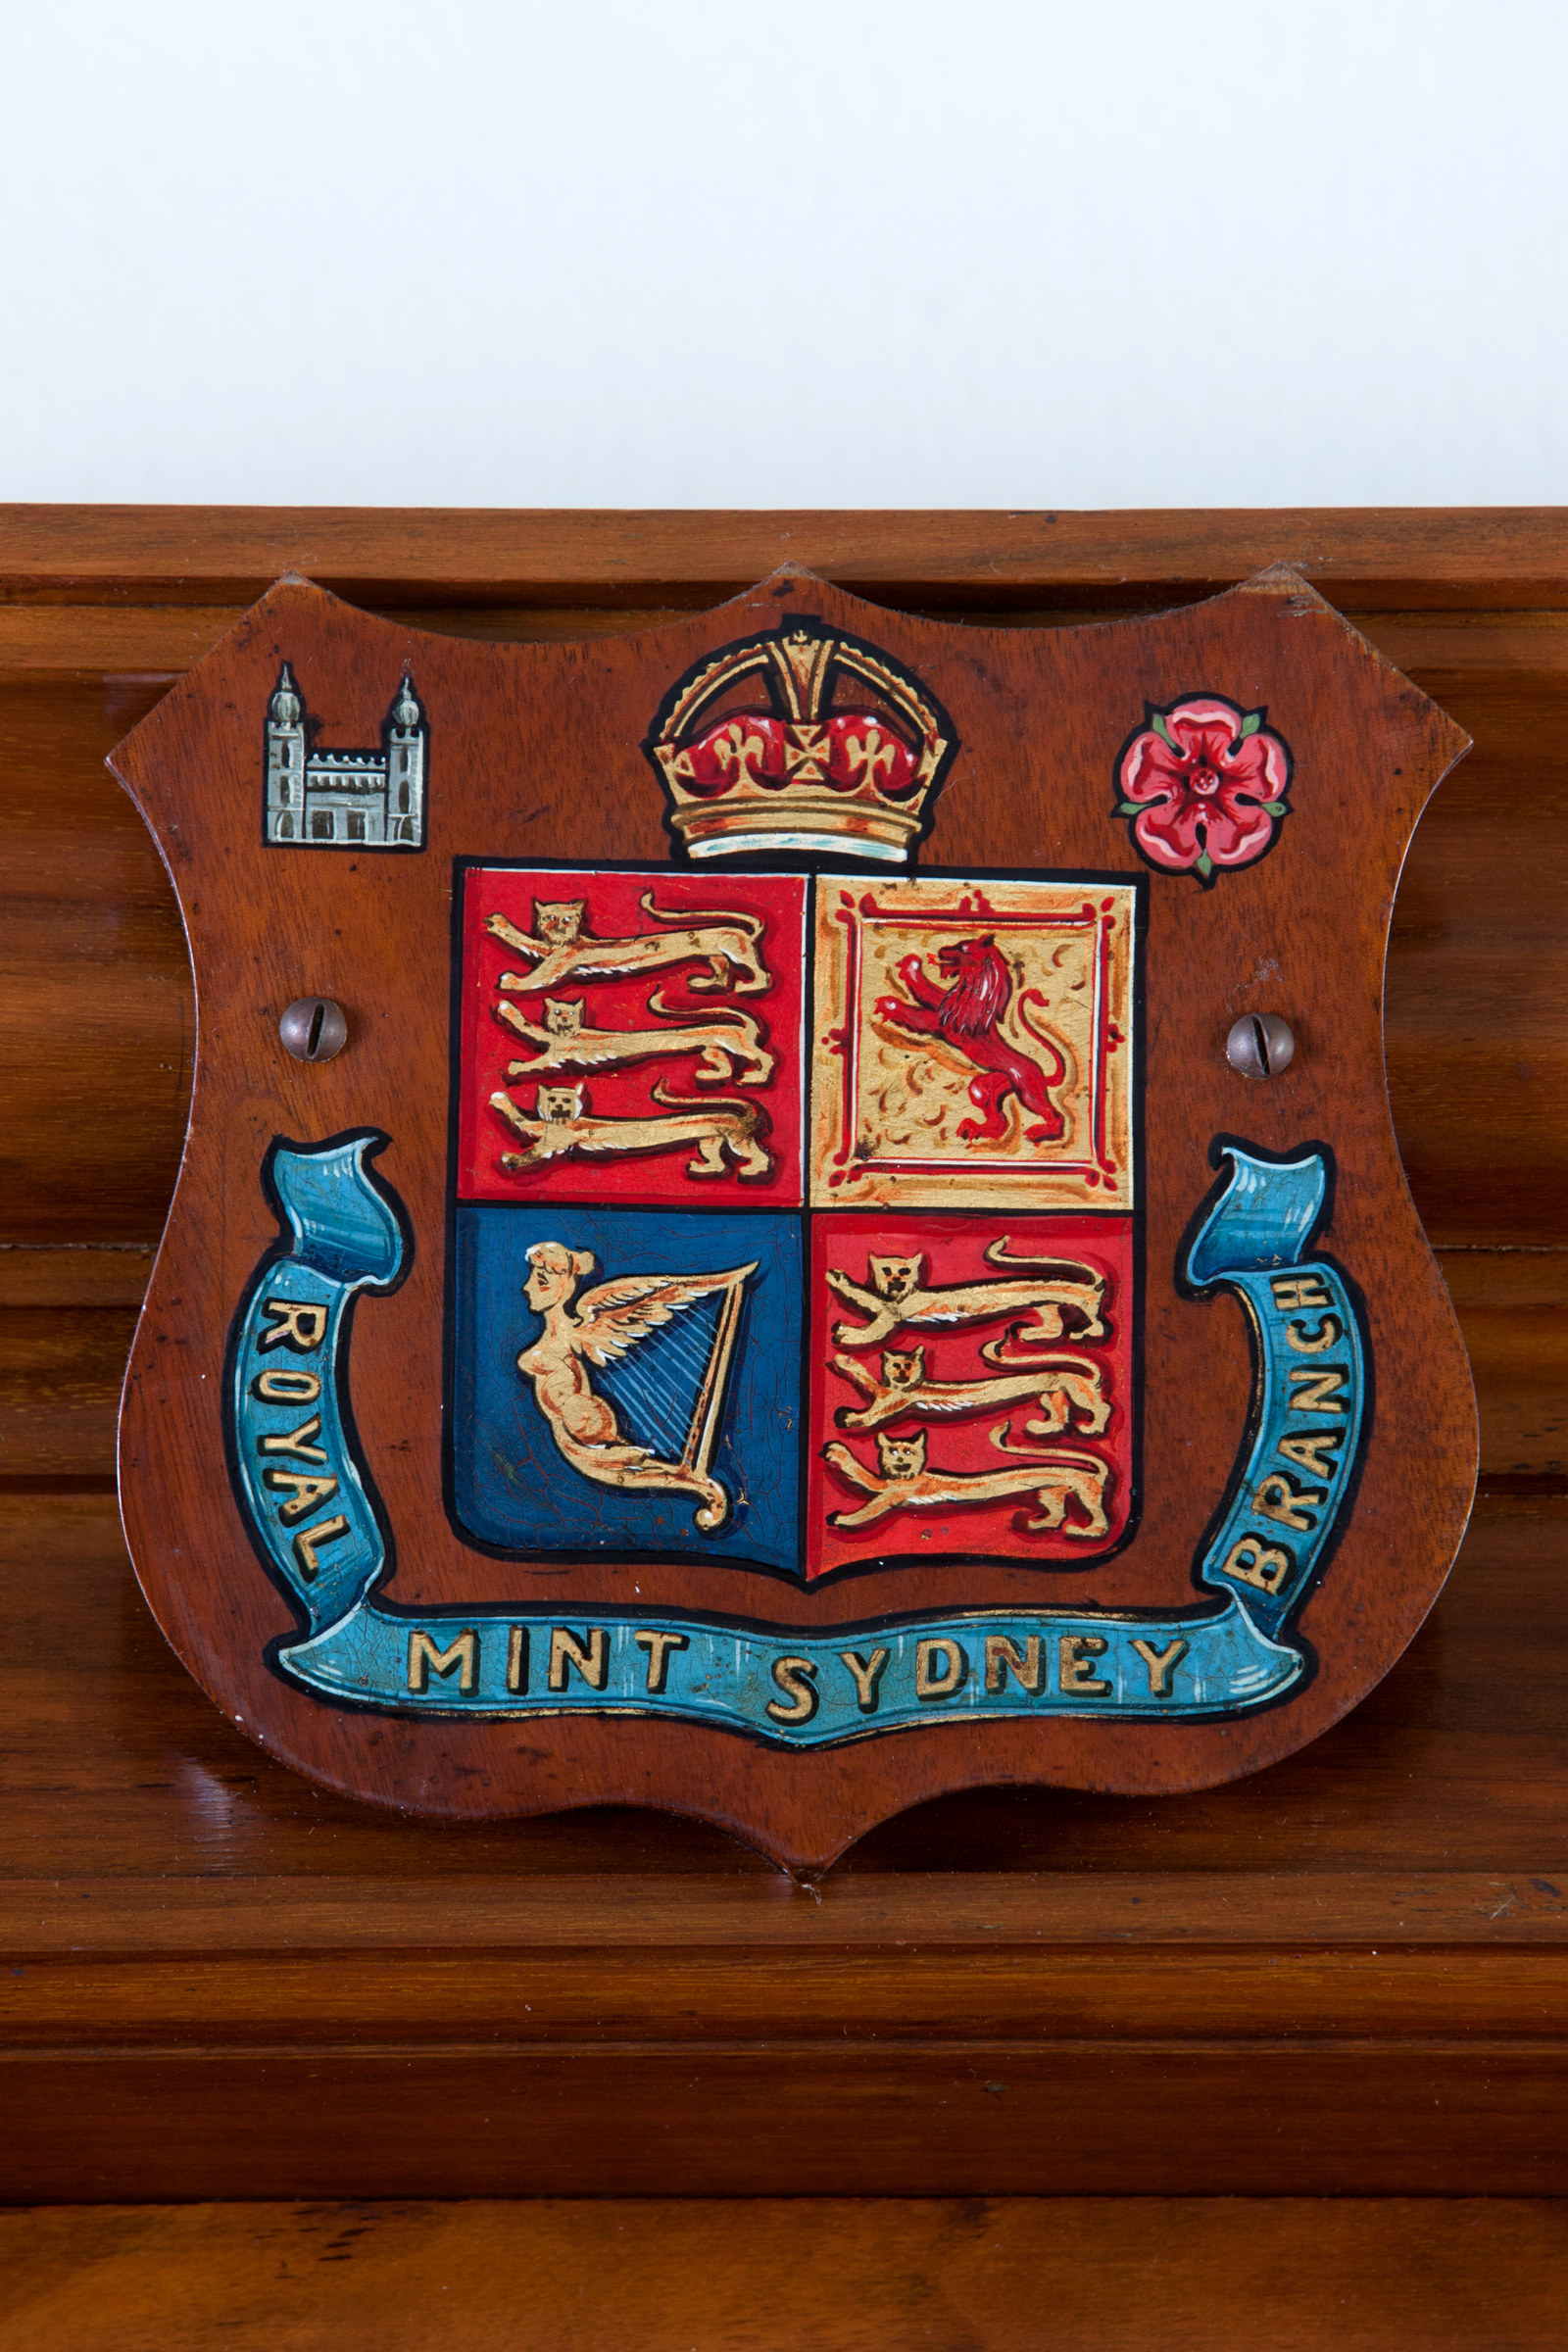 World War I roll of honour board, 1914 - 1919, Royal Mint, Sydney